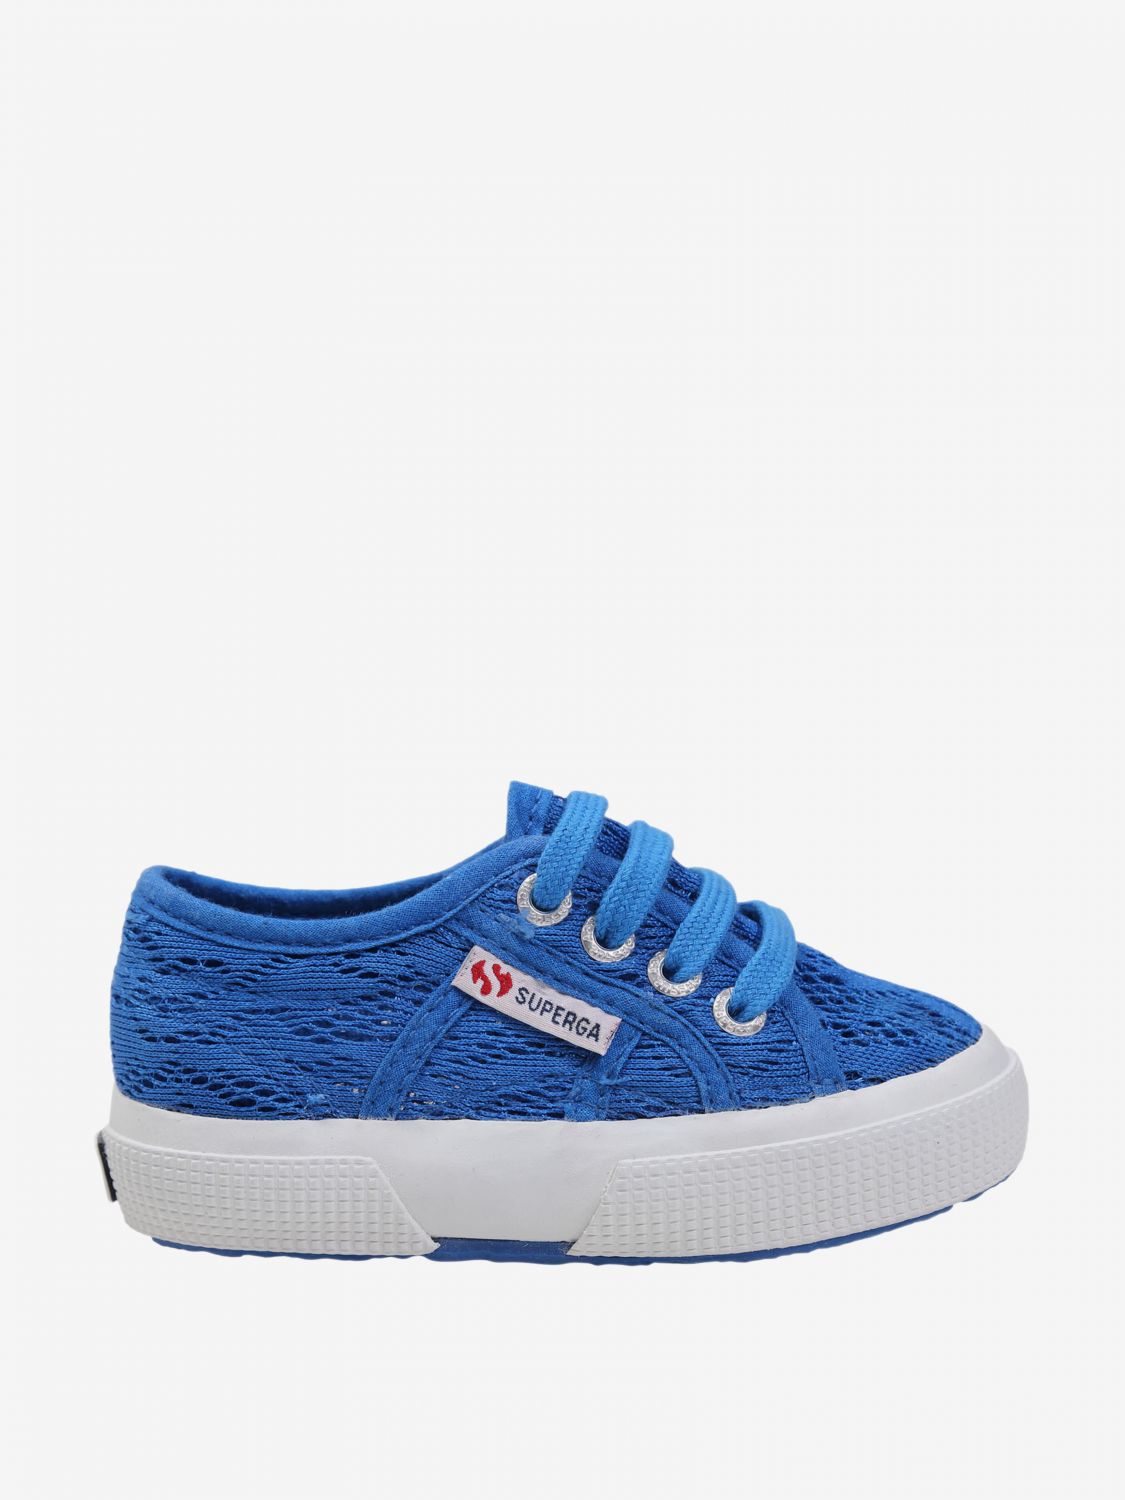 Terug kijken Dwang duif Superga Outlet: mesh sneakers with logo - Blue | Superga shoes s00bru0  online on GIGLIO.COM